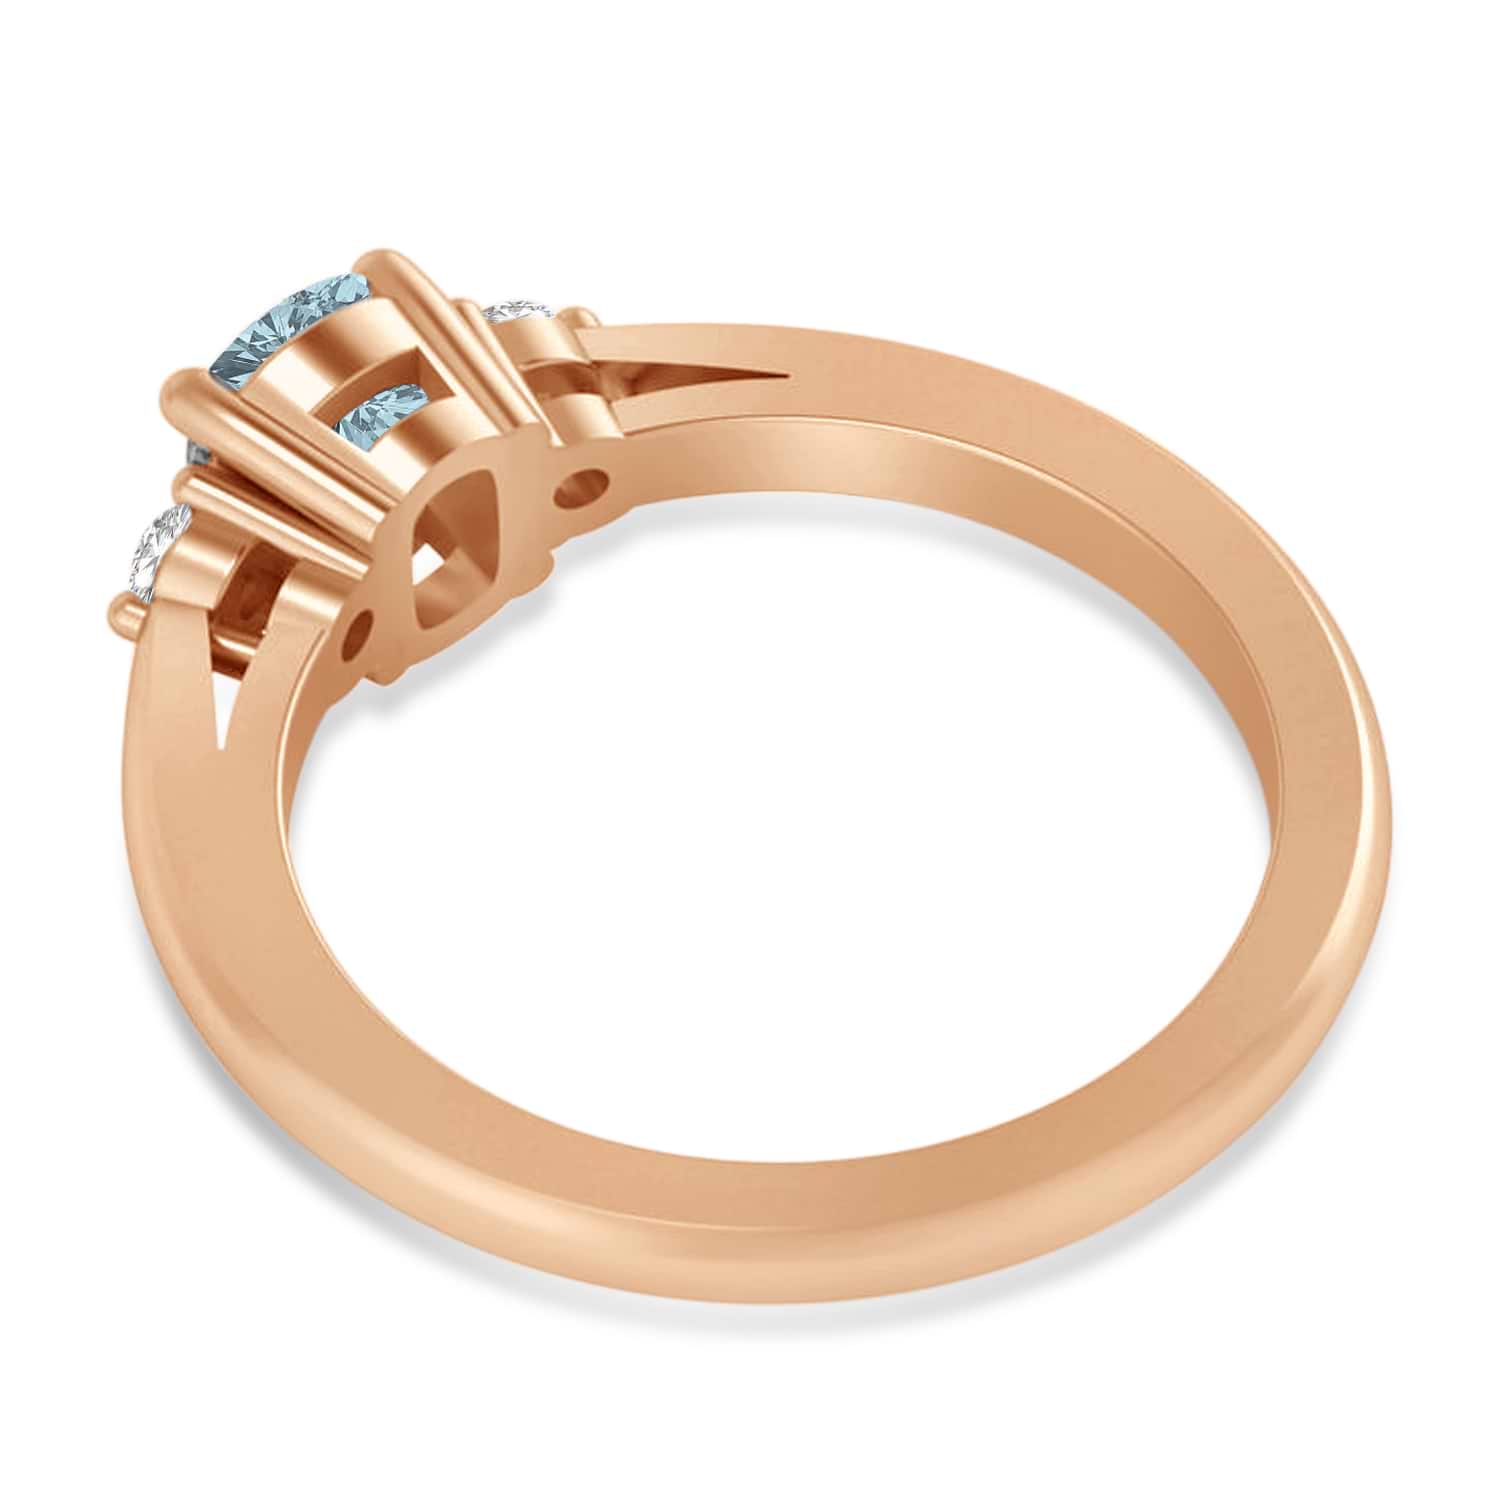 Cushion Aquamarine & Diamond Three-Stone Engagement Ring 14k Rose Gold (1.14ct)